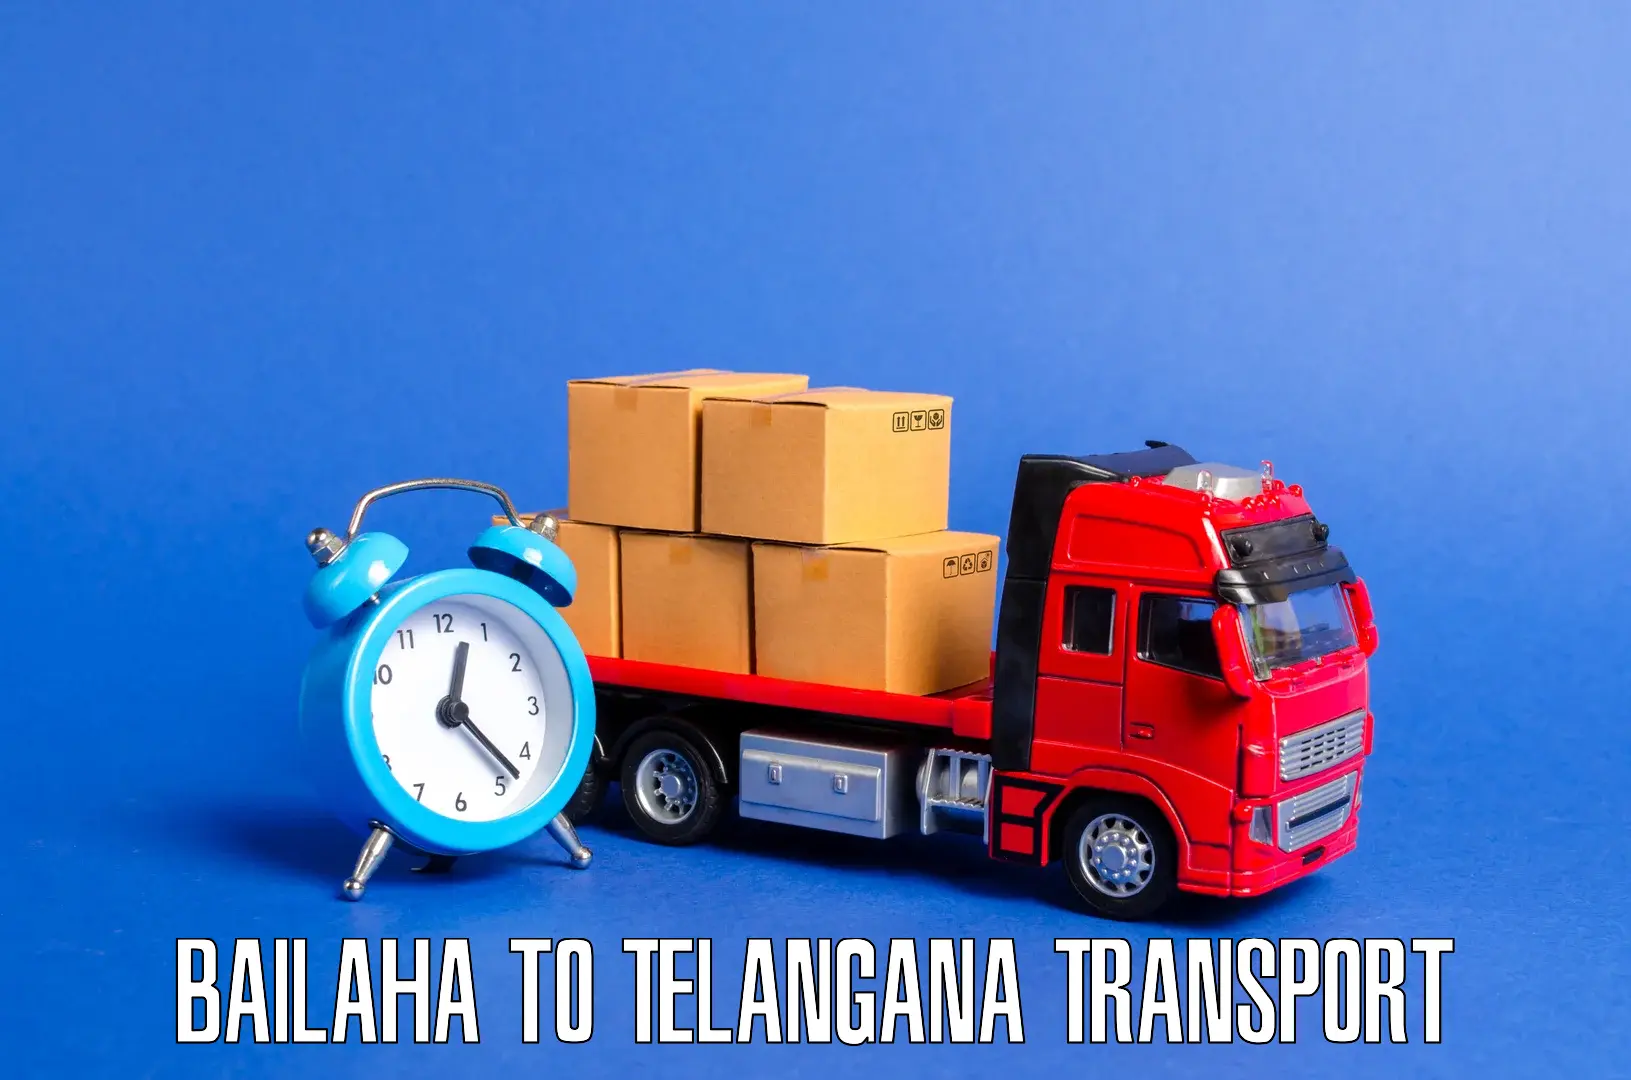 Delivery service Bailaha to Sathupally